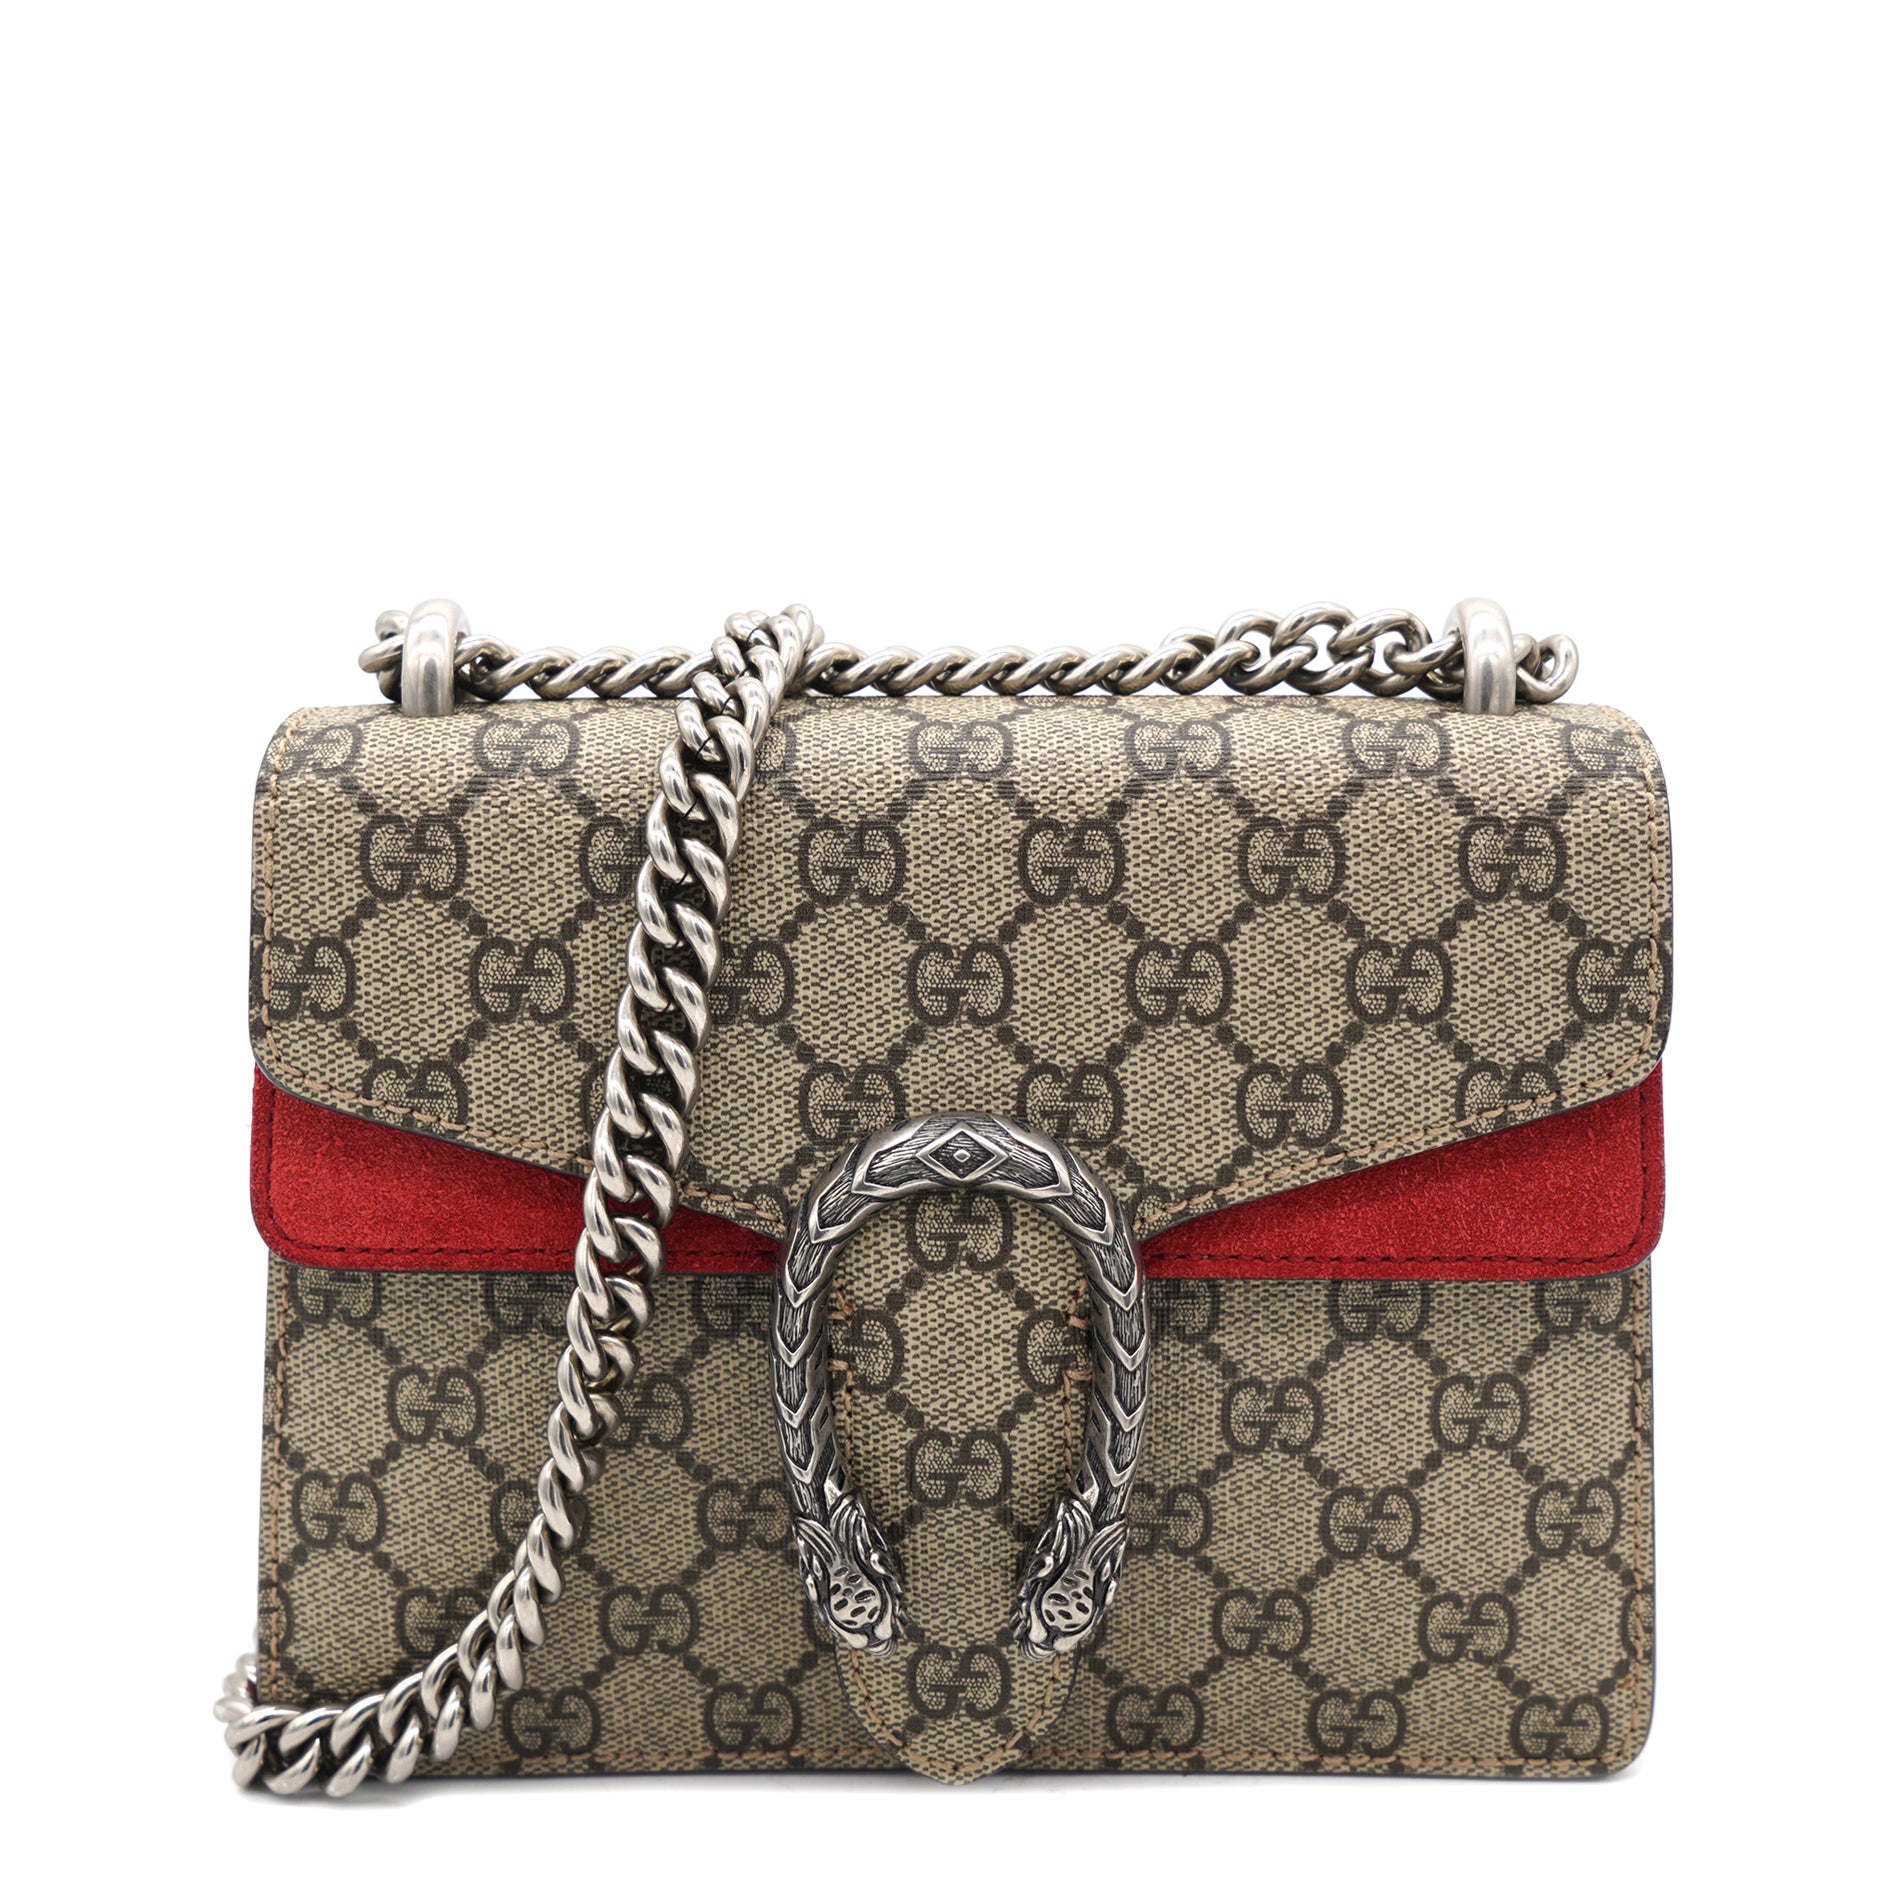 Gucci Dionysus Mini GG Supreme Tote Bag